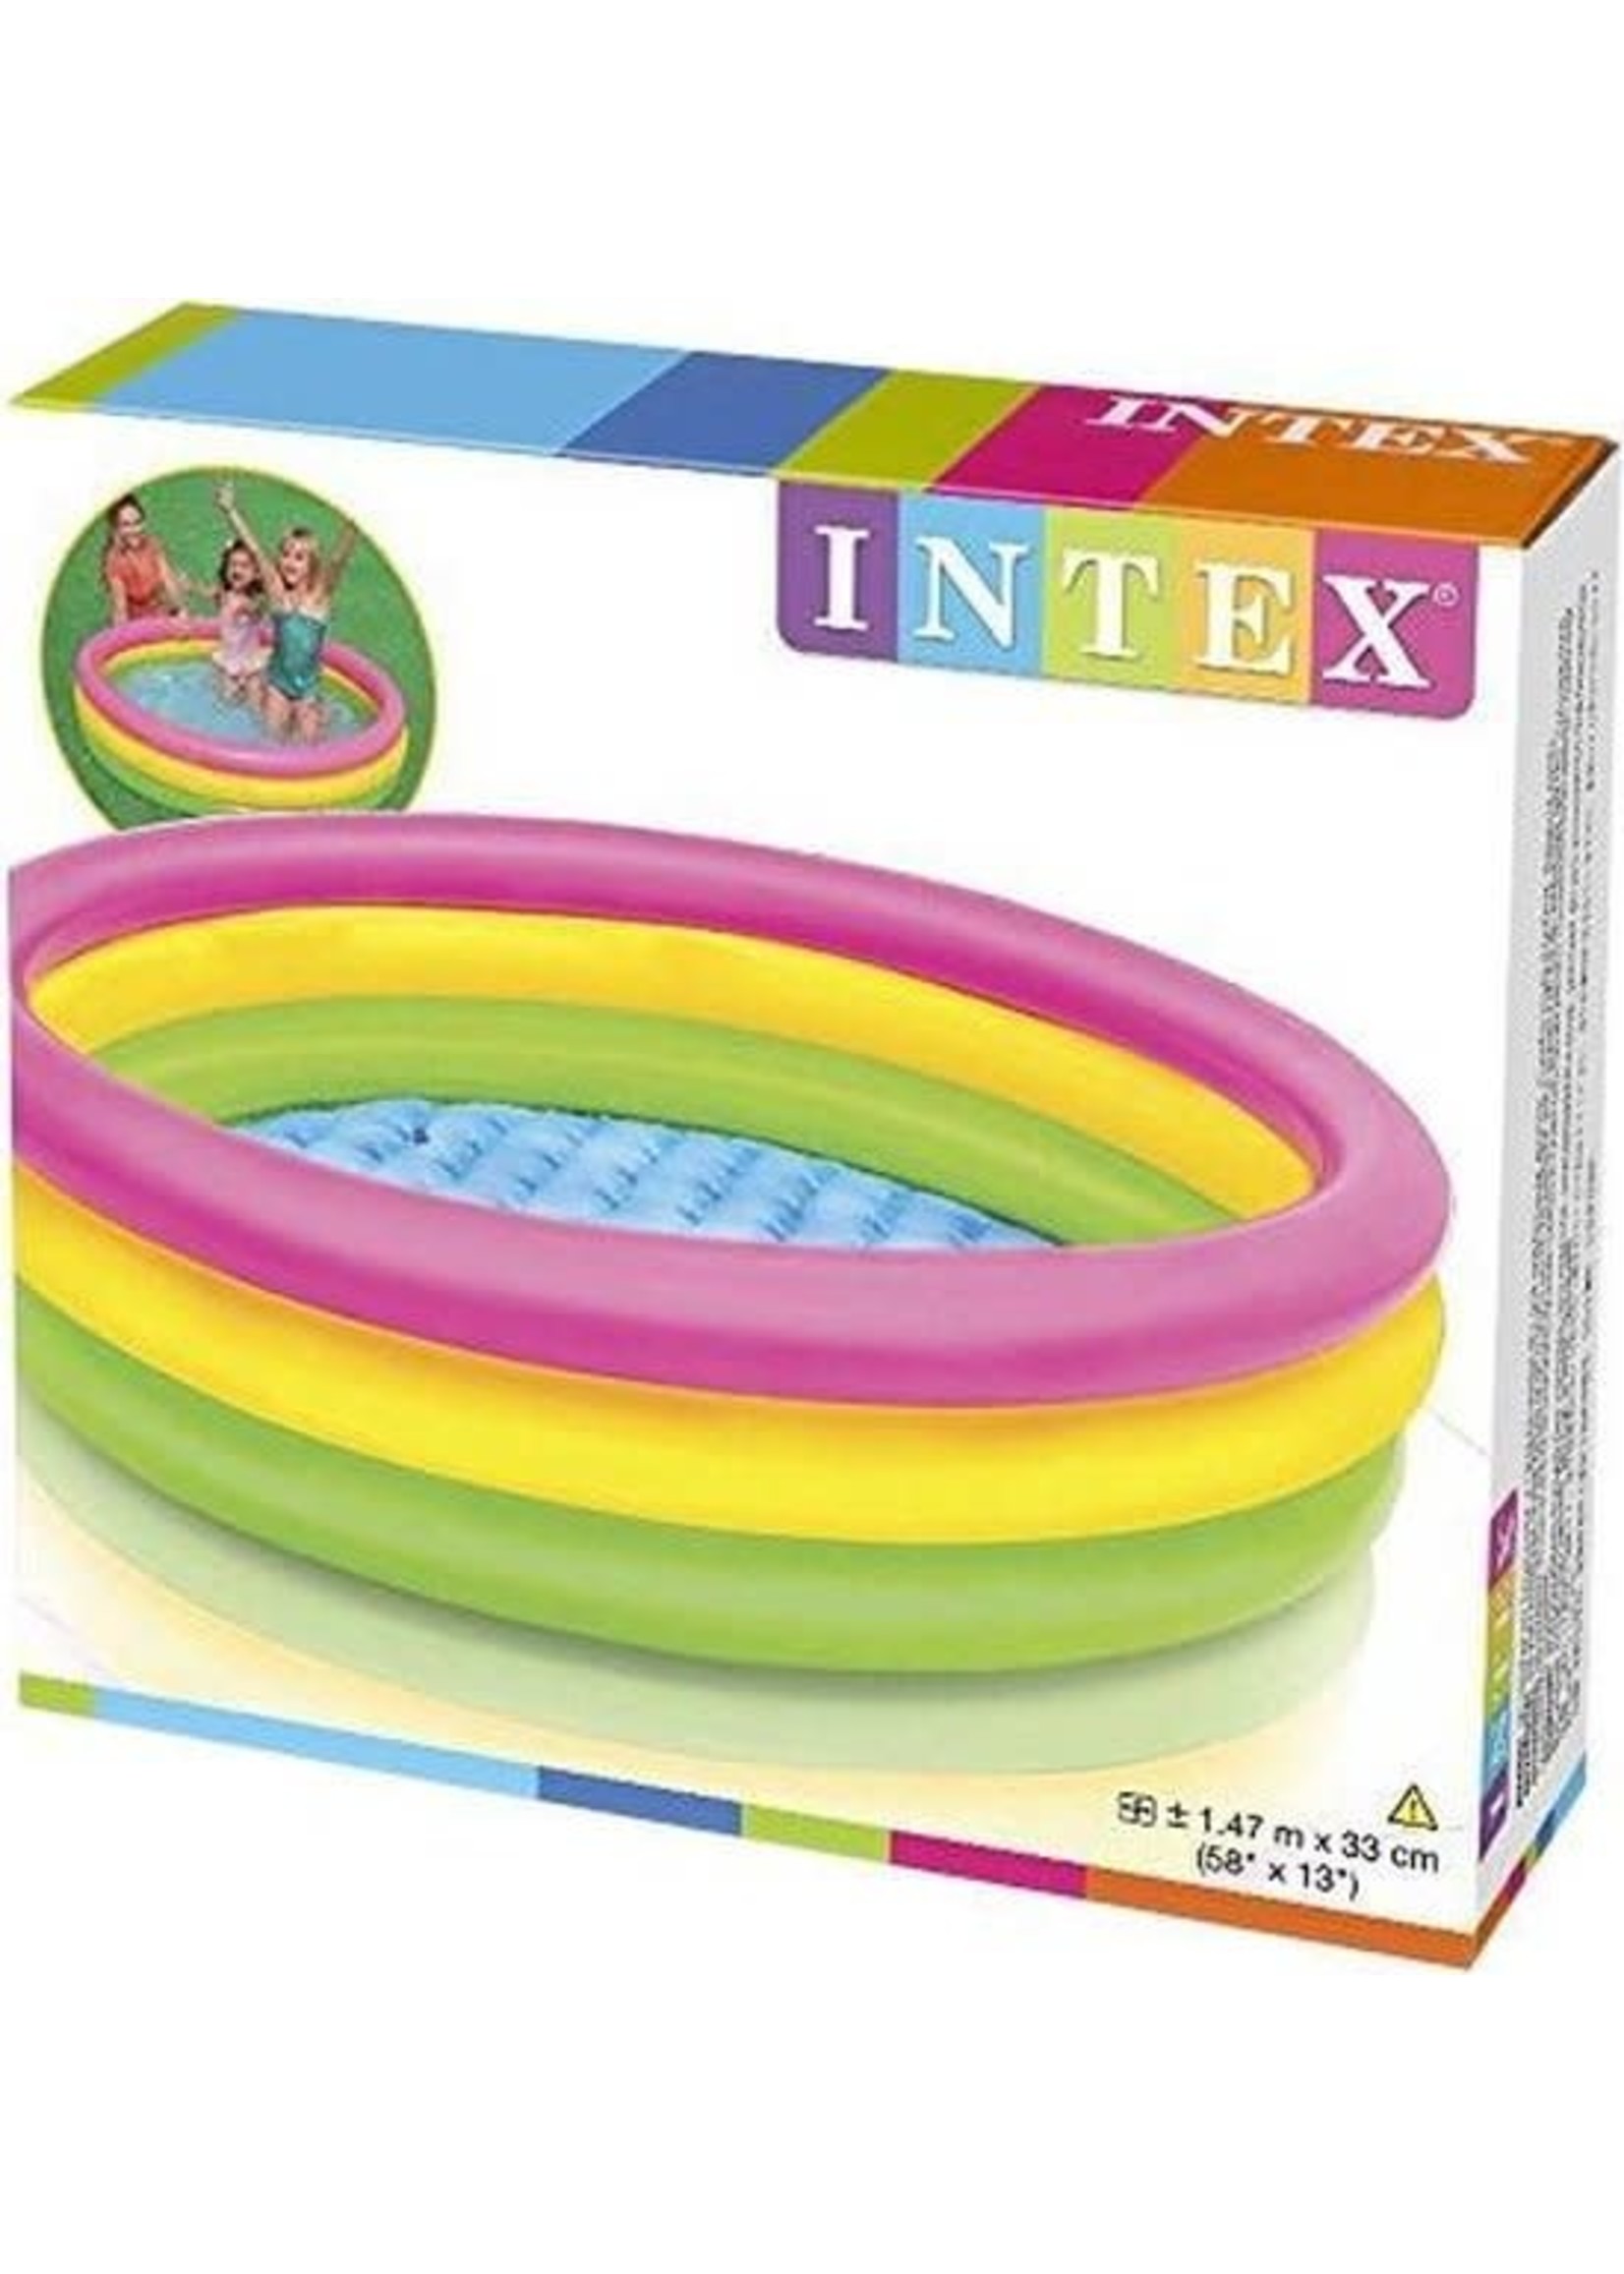 Intex Intex Zwembad Sunset Glow 147 cm - Kinderzwembad